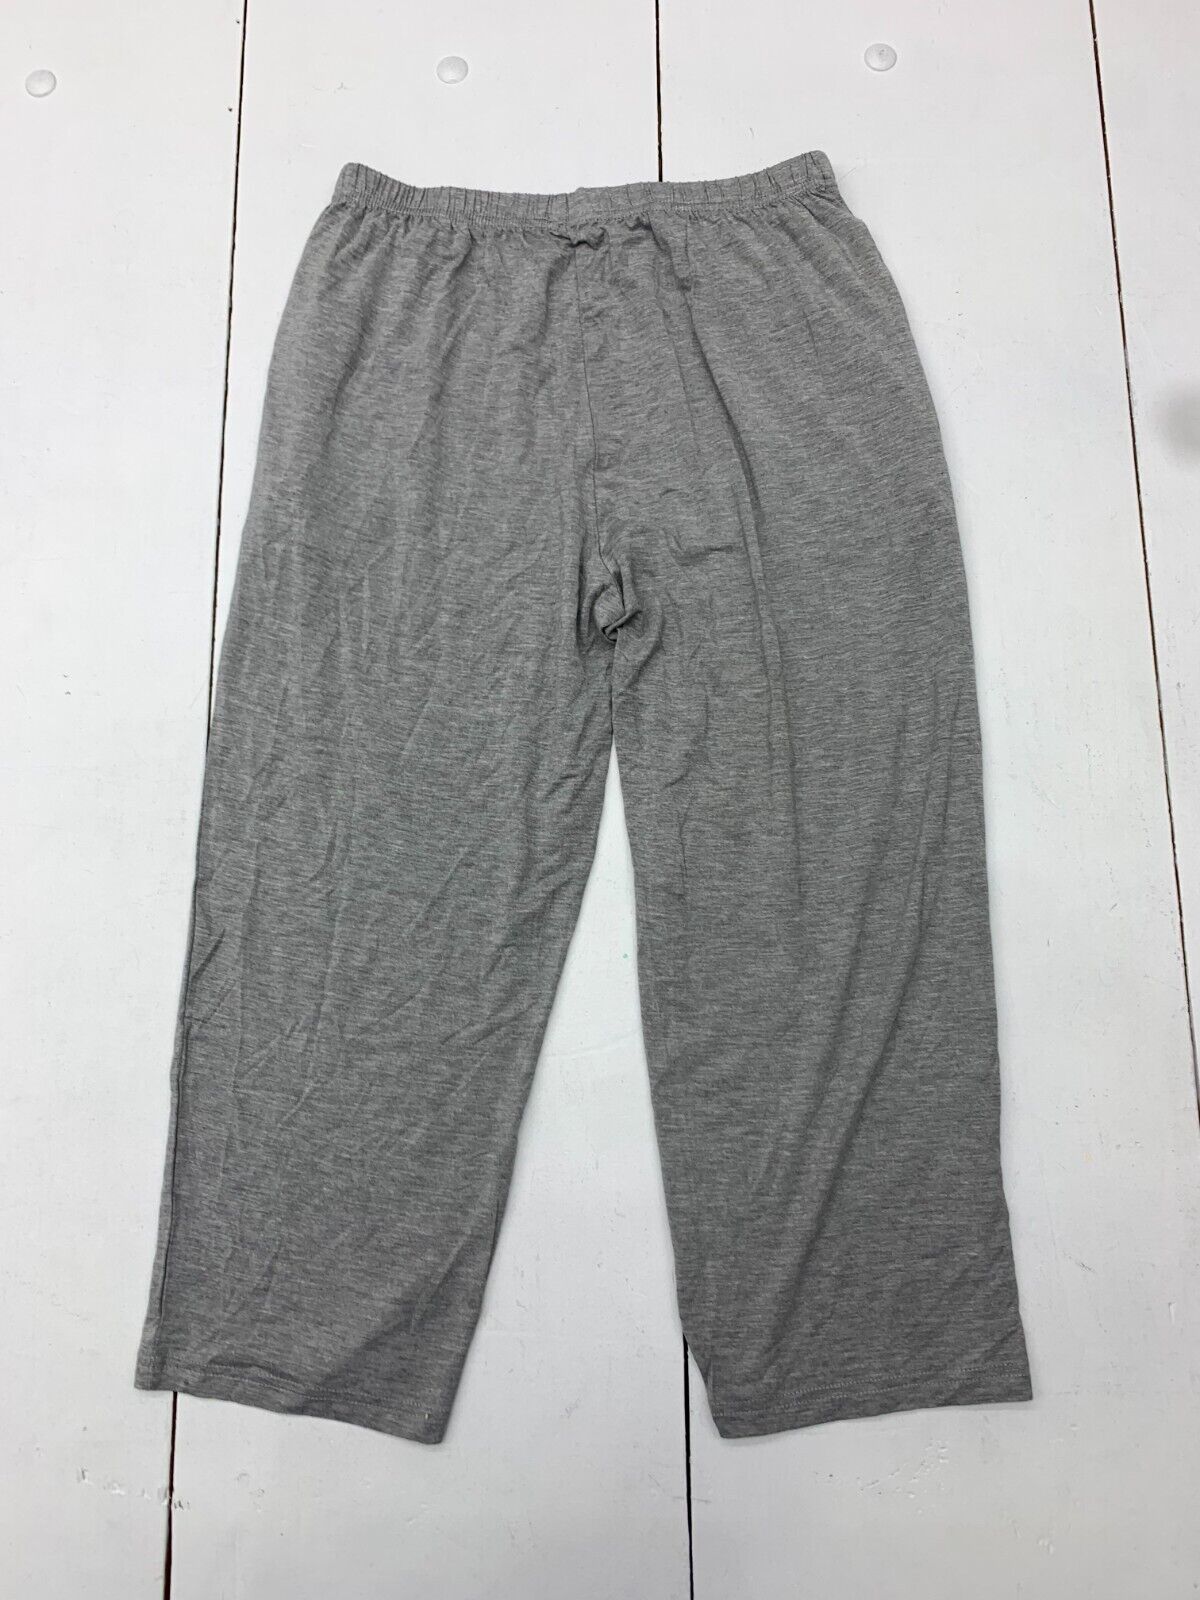 Latuza Womens Grey Pajama Pants Size Small - beyond exchange